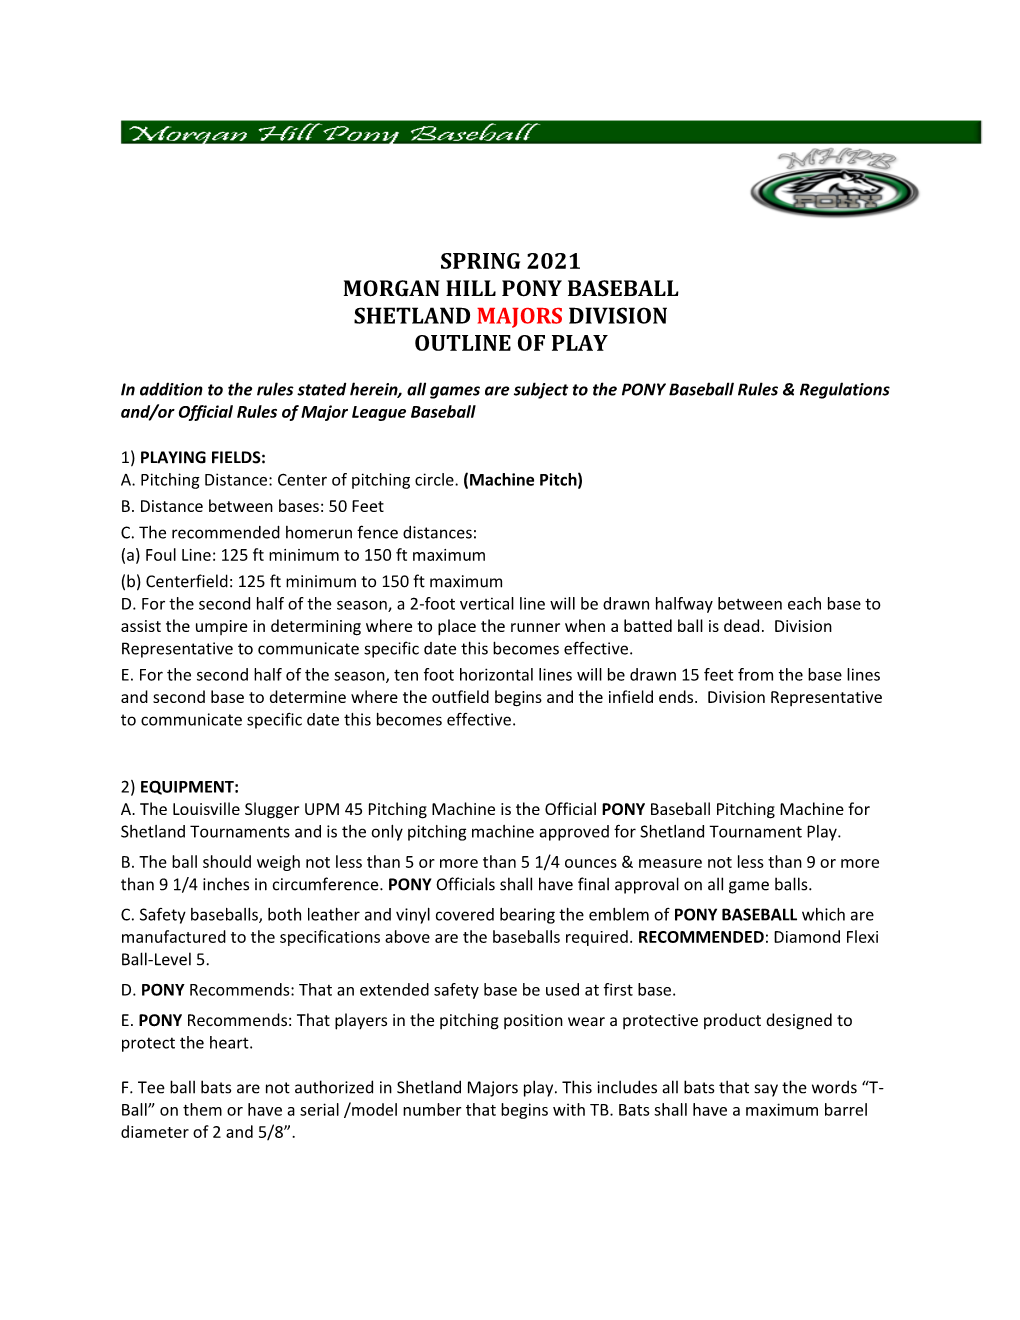 Spring 2021 Morgan Hill Pony Baseball Shetland Majors Division Outline of Play